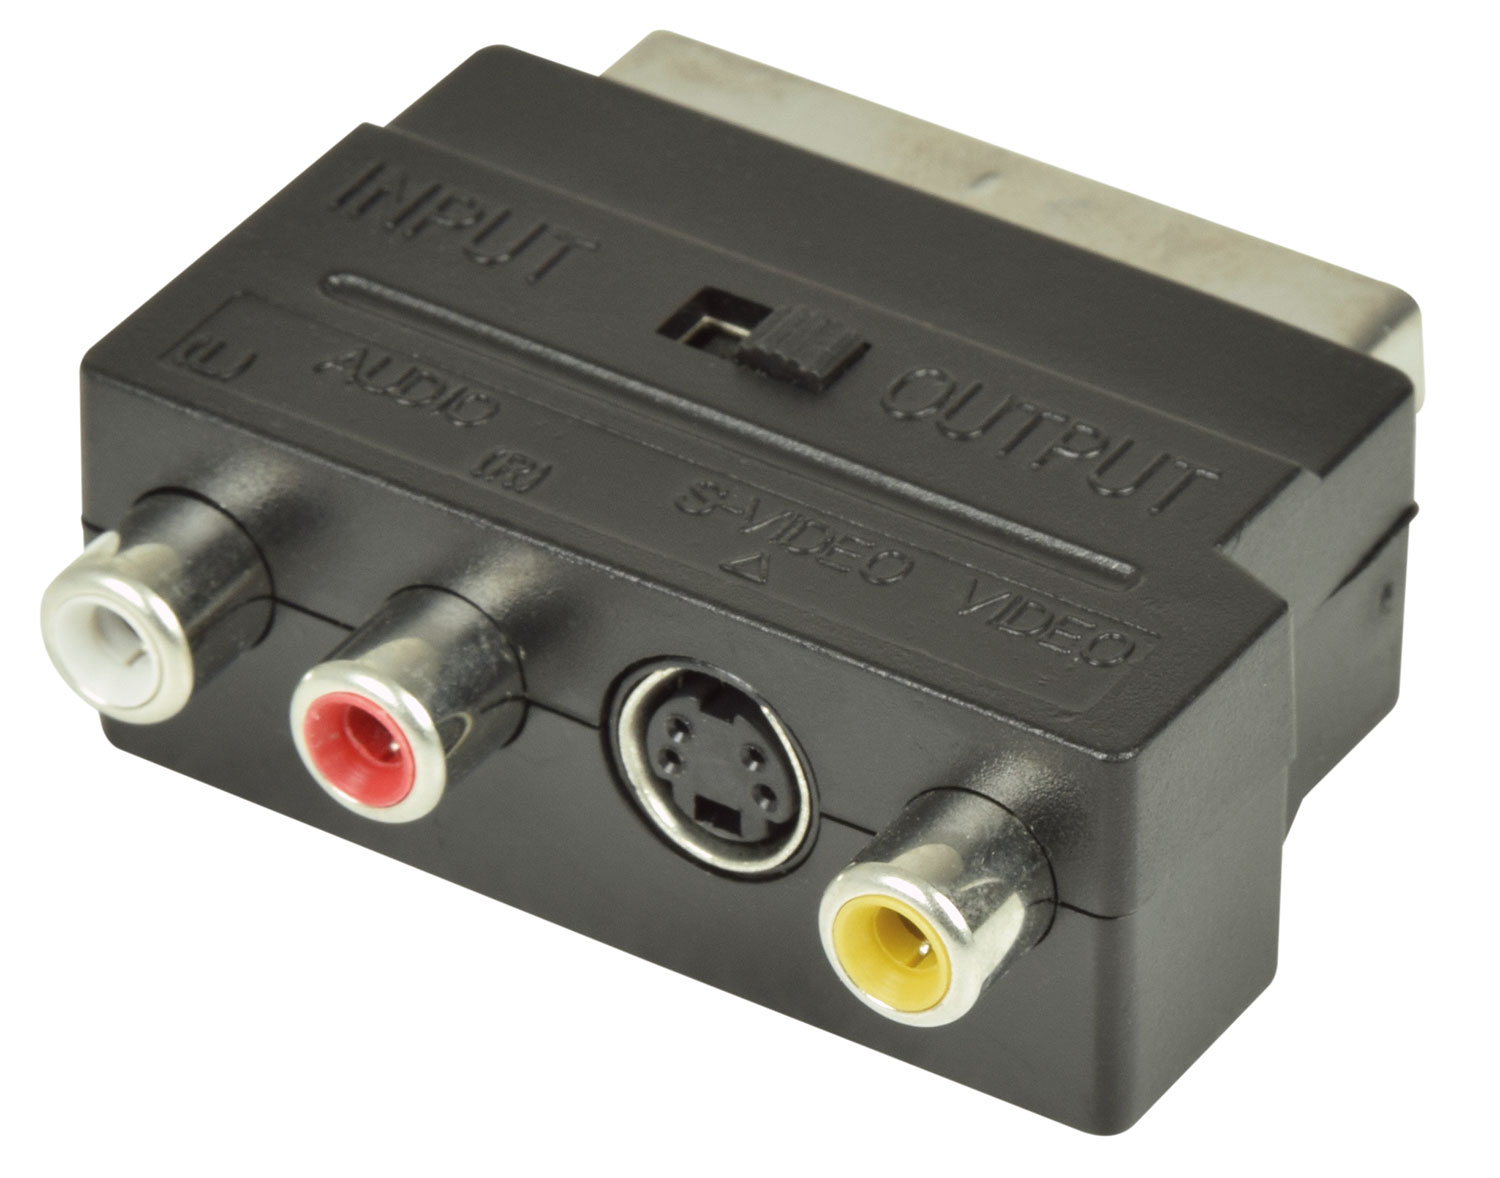 Conversor Euroconector a HDMI - Cetronic